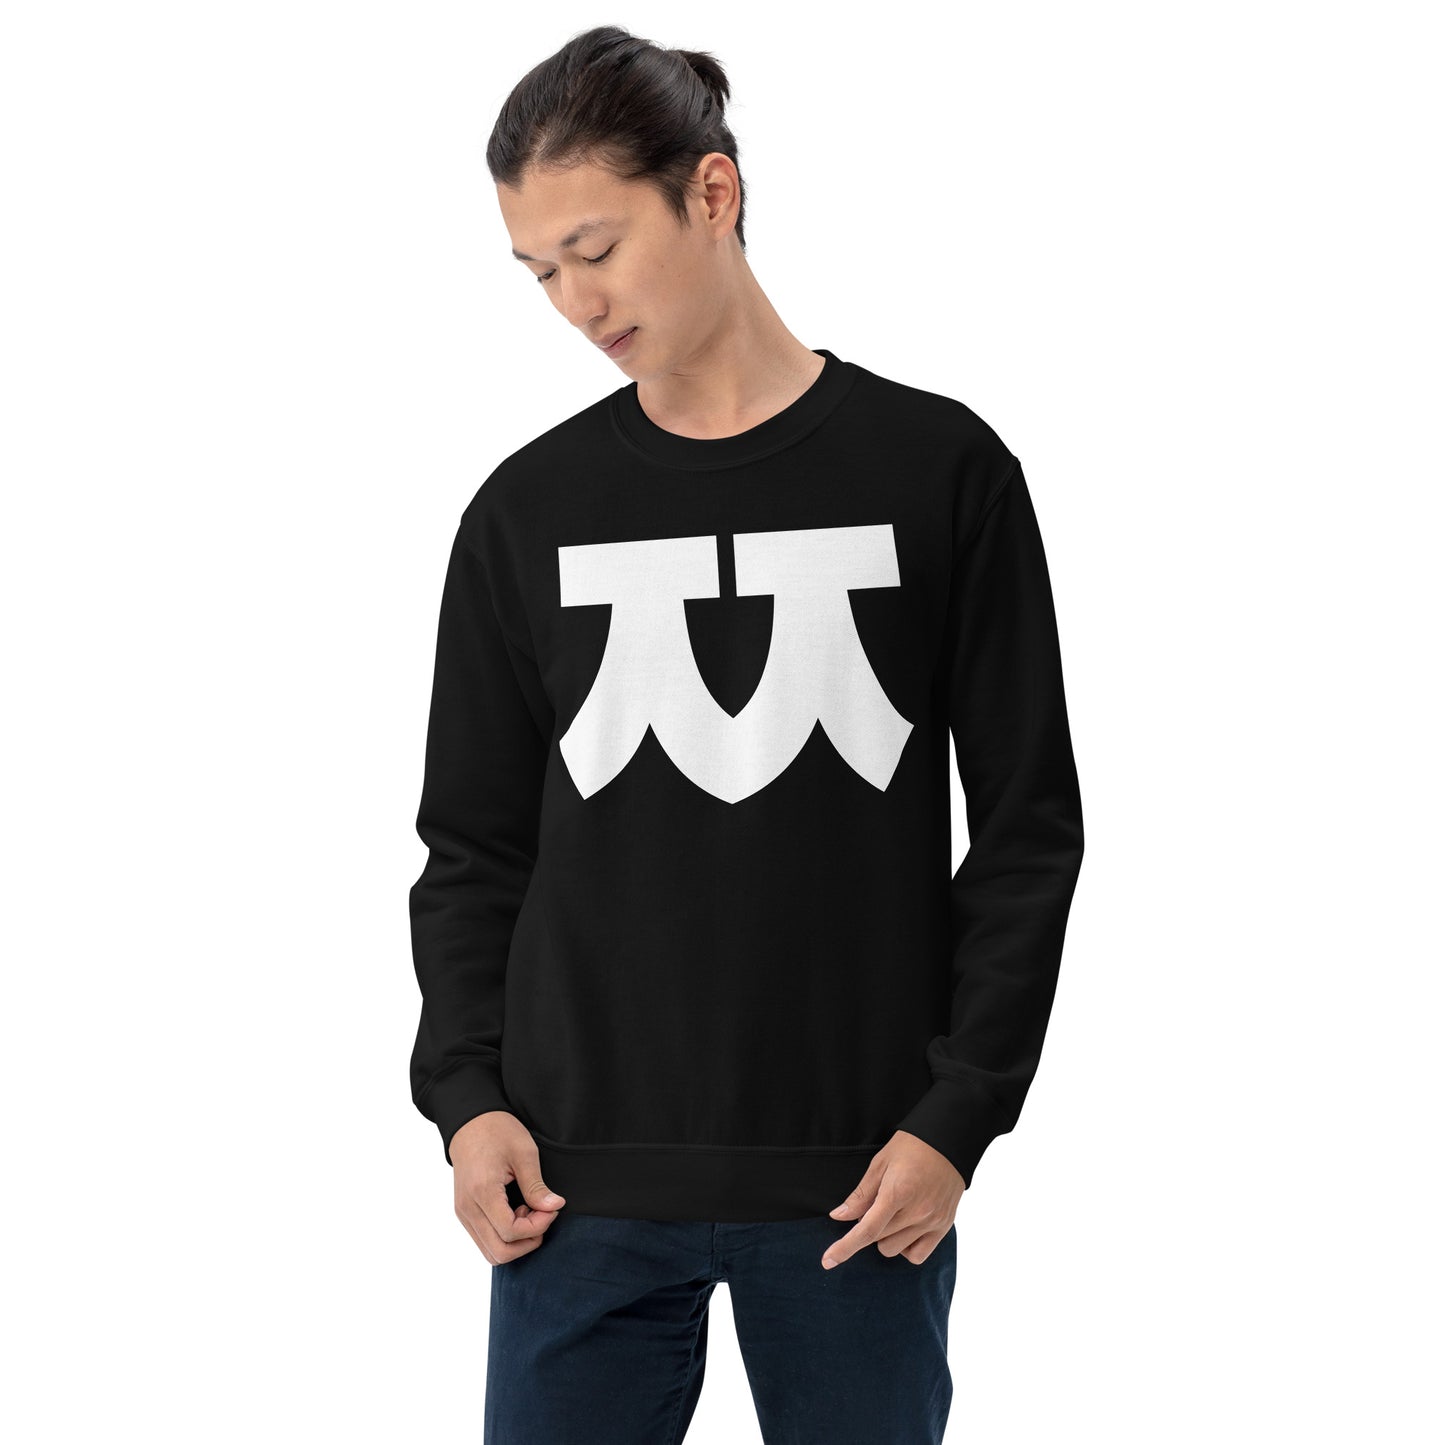 Korean Hangul Ssang Jieut (jj) sound Geometrical Consonant Unisex Sweatshirt